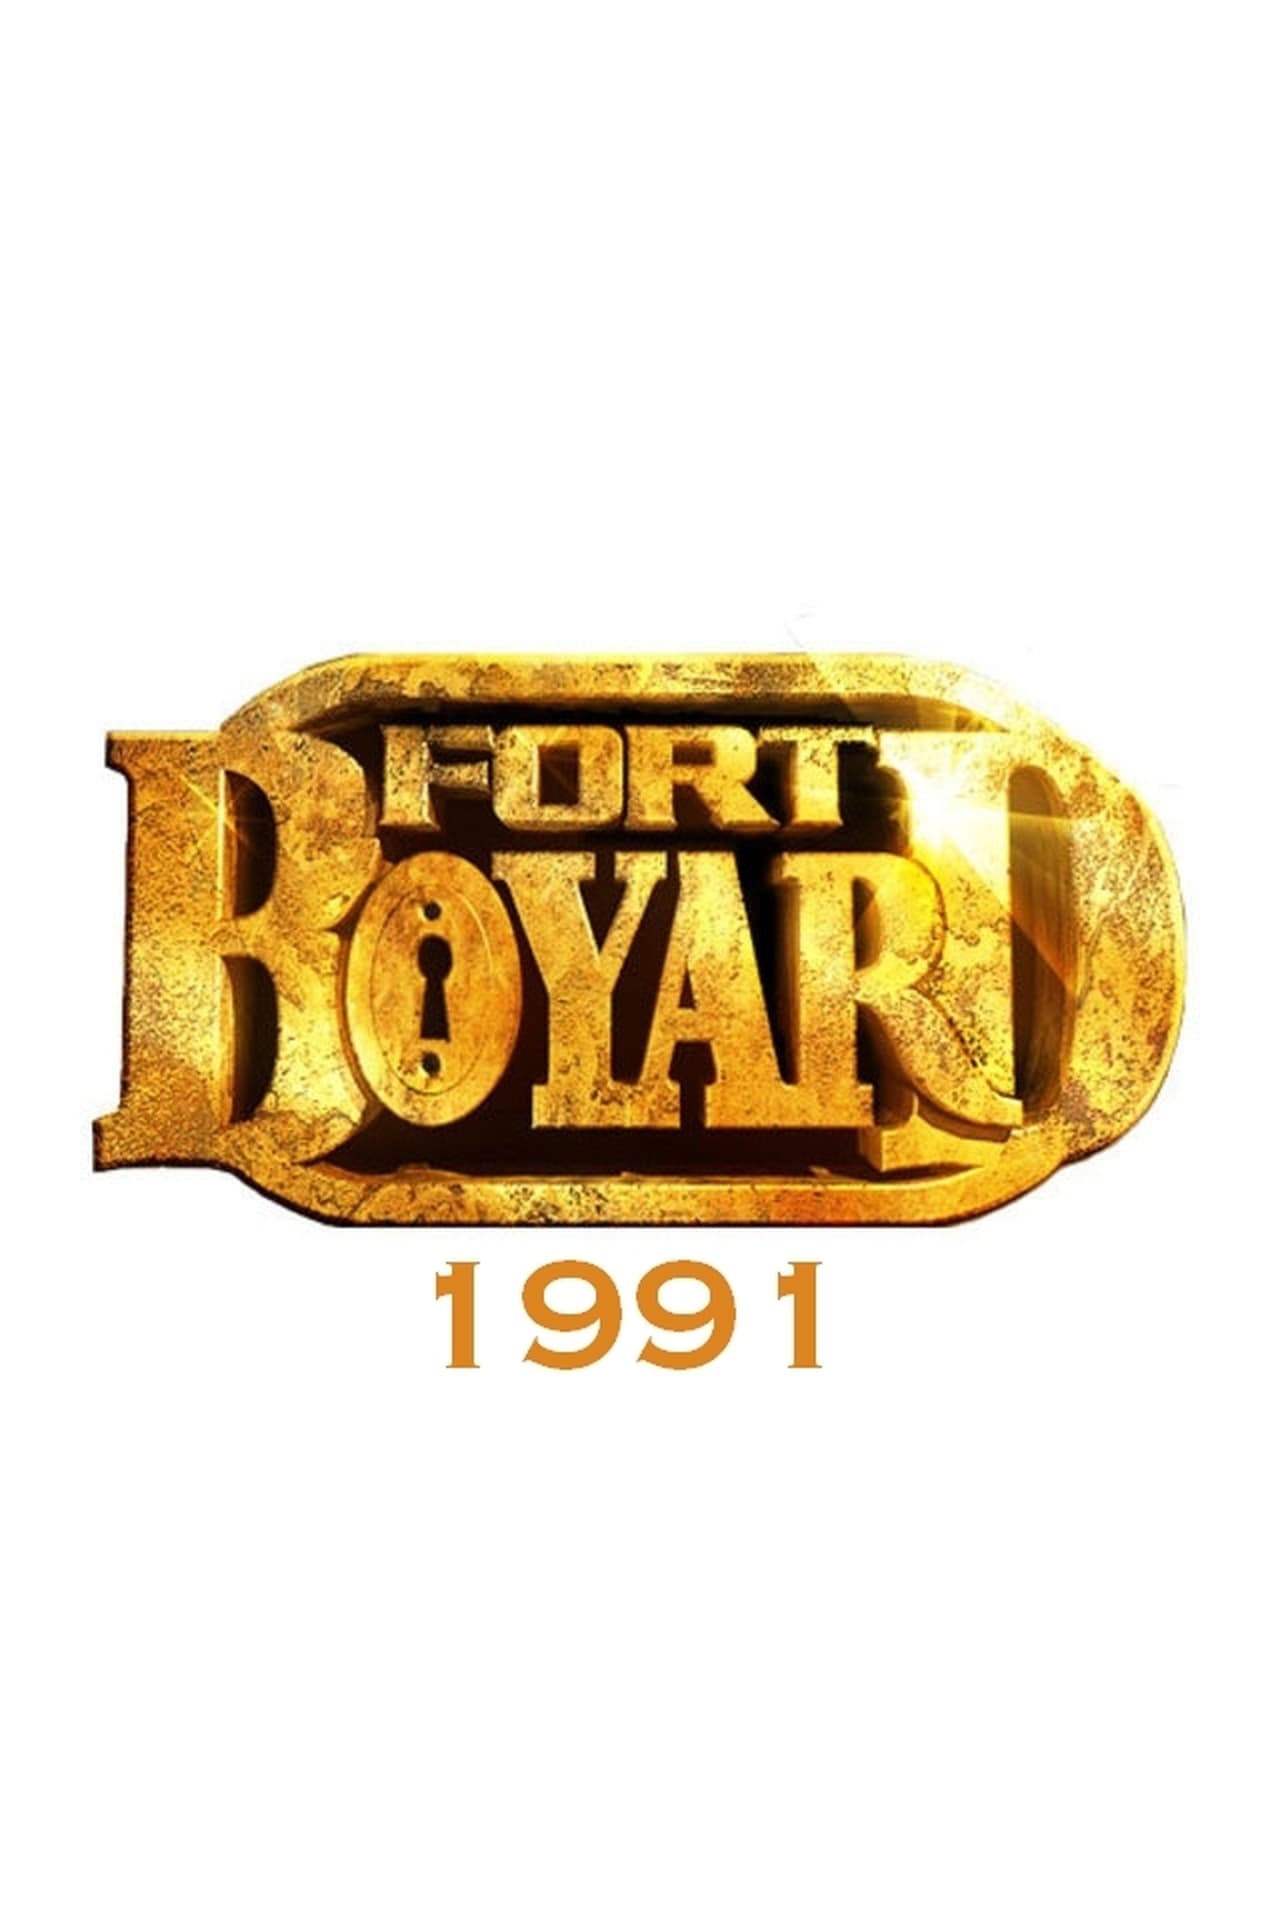 Fort Boyard (1991)